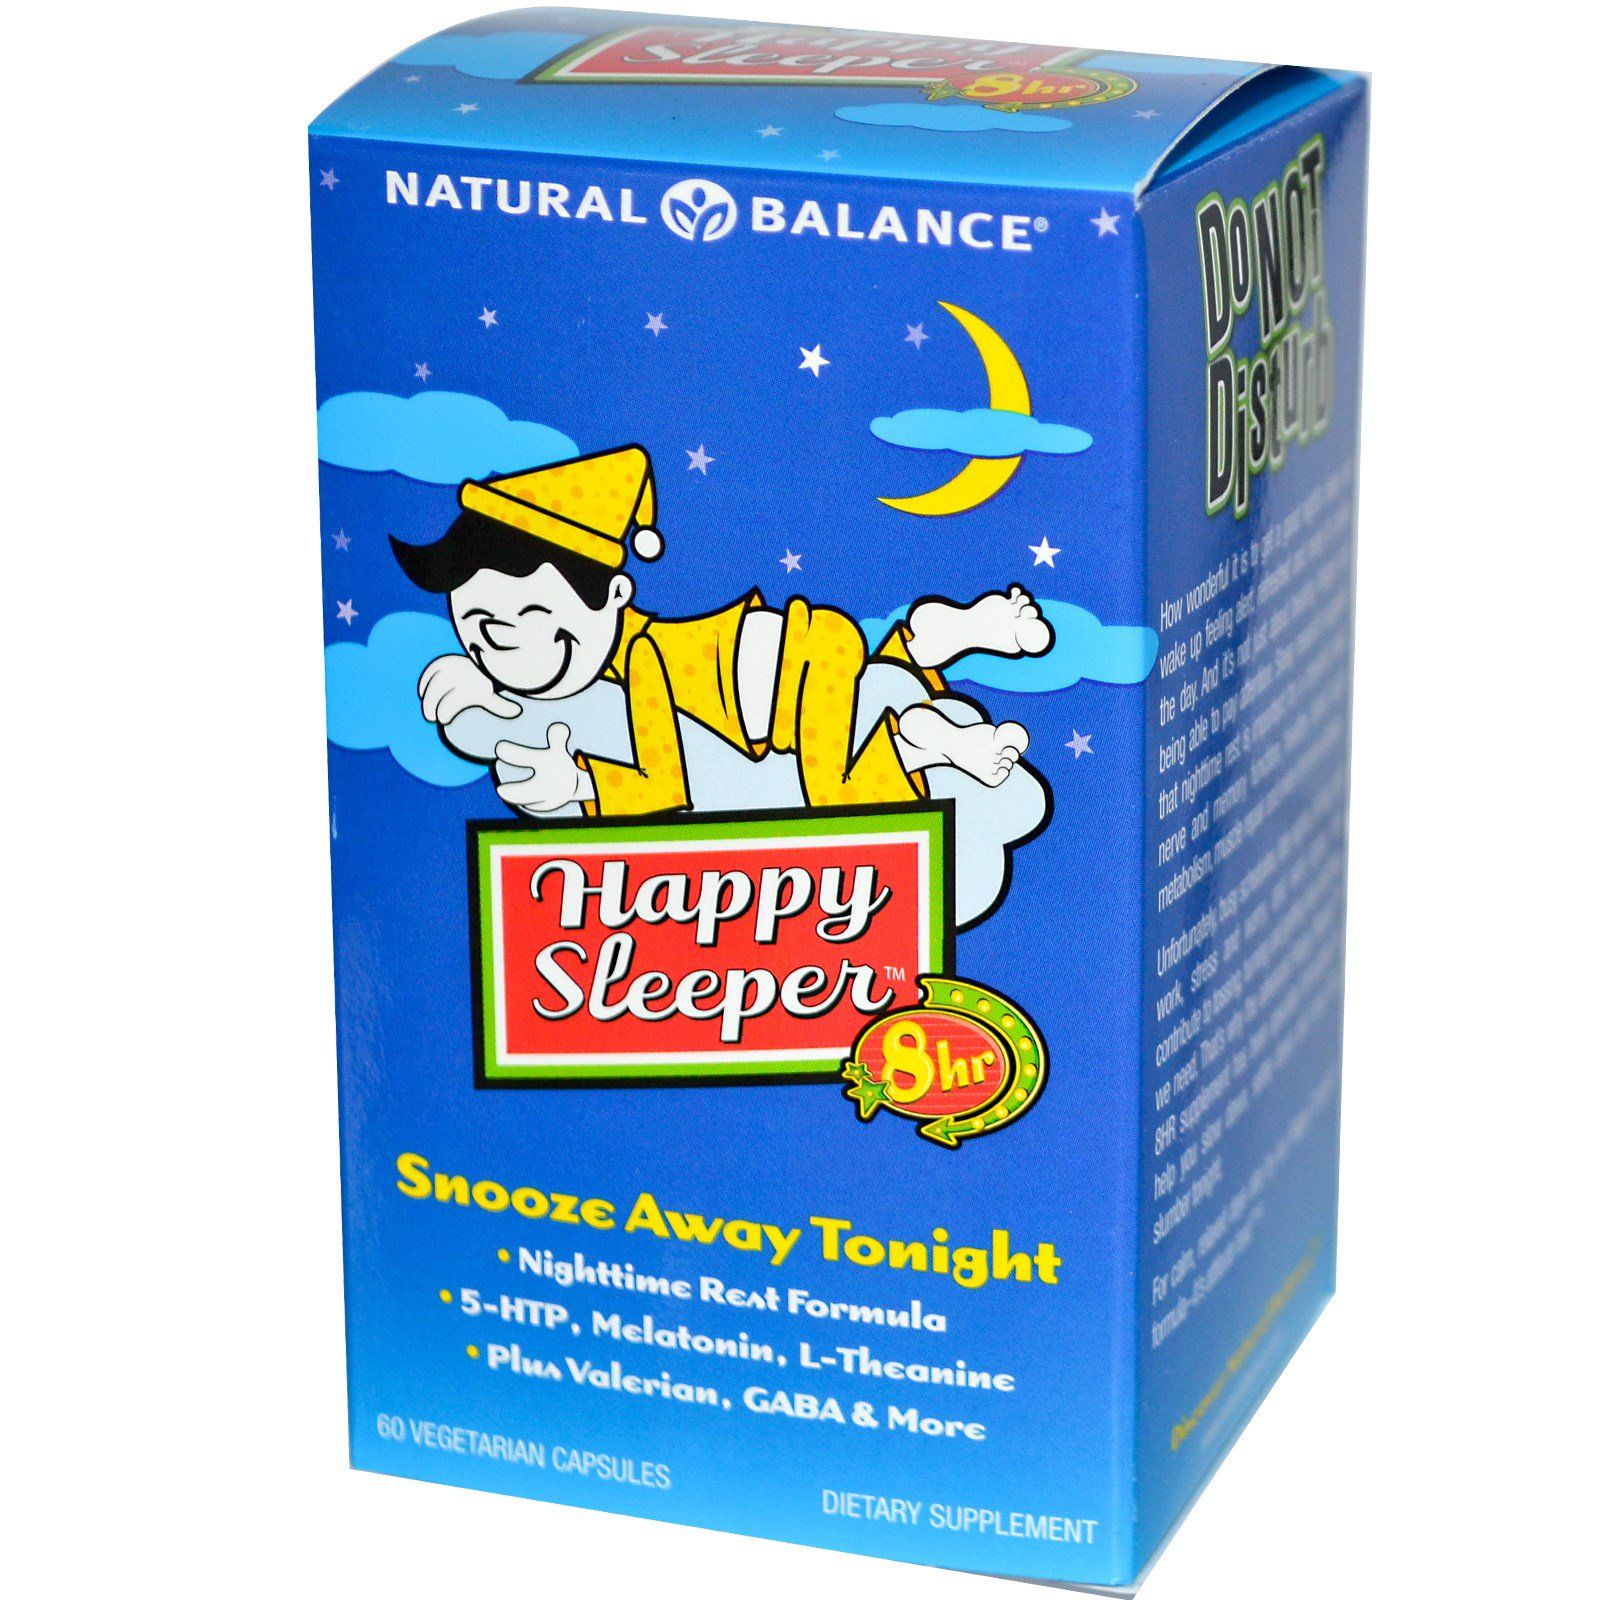 Natural Balance Happy Sleeper 8 Hr 60 растительных капсул формула баланса жидкости natural balance bloat x 60 растительных капсул